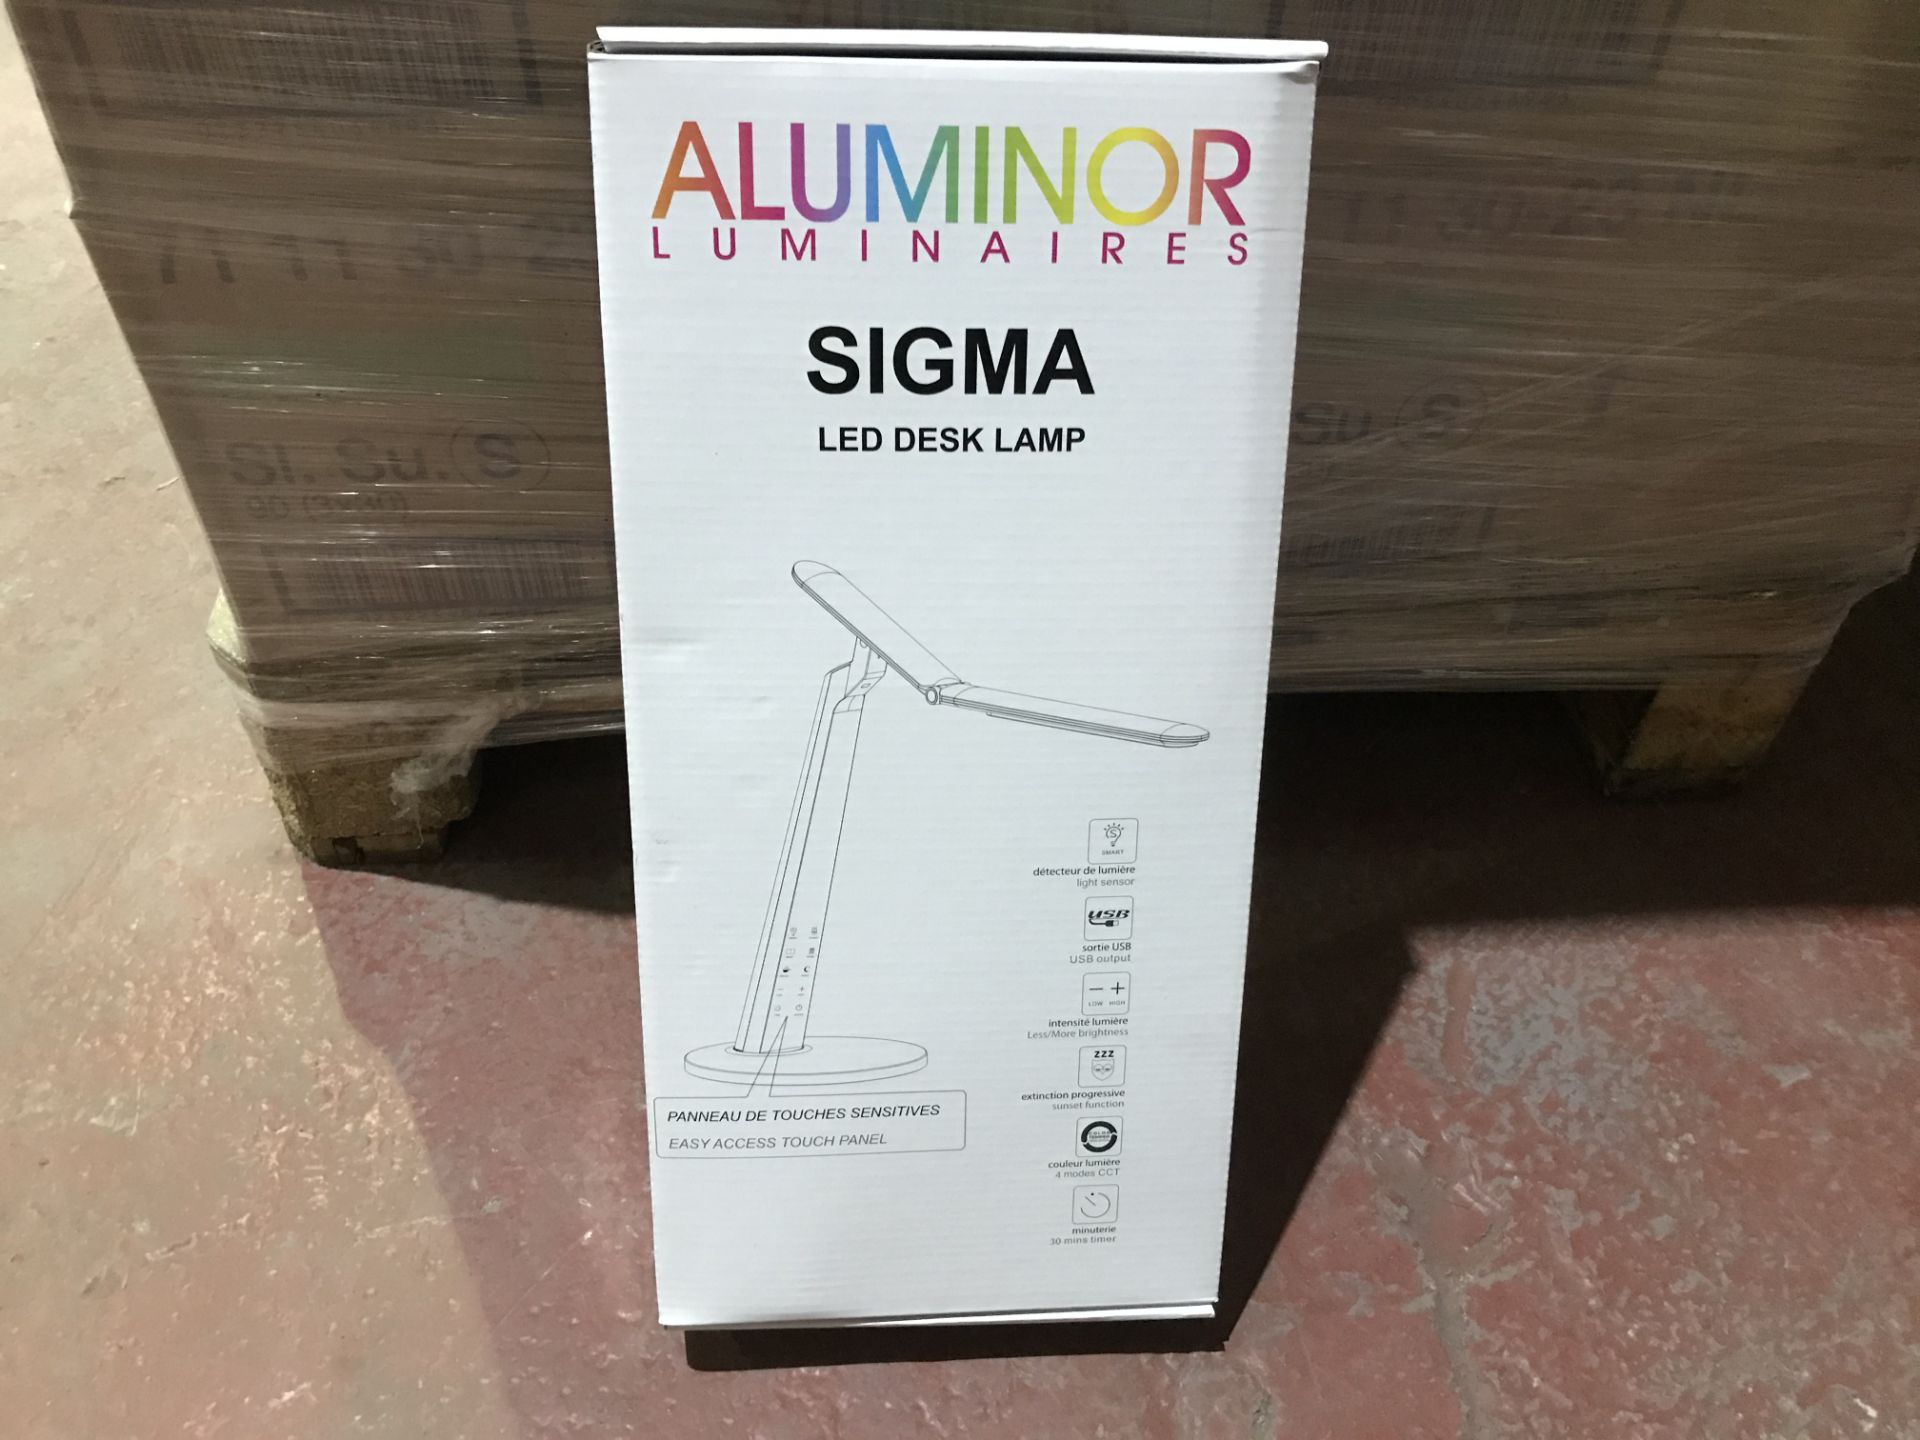 2 X ALUMINOR LUMINAIRES SIGMA LED DESK LAMP